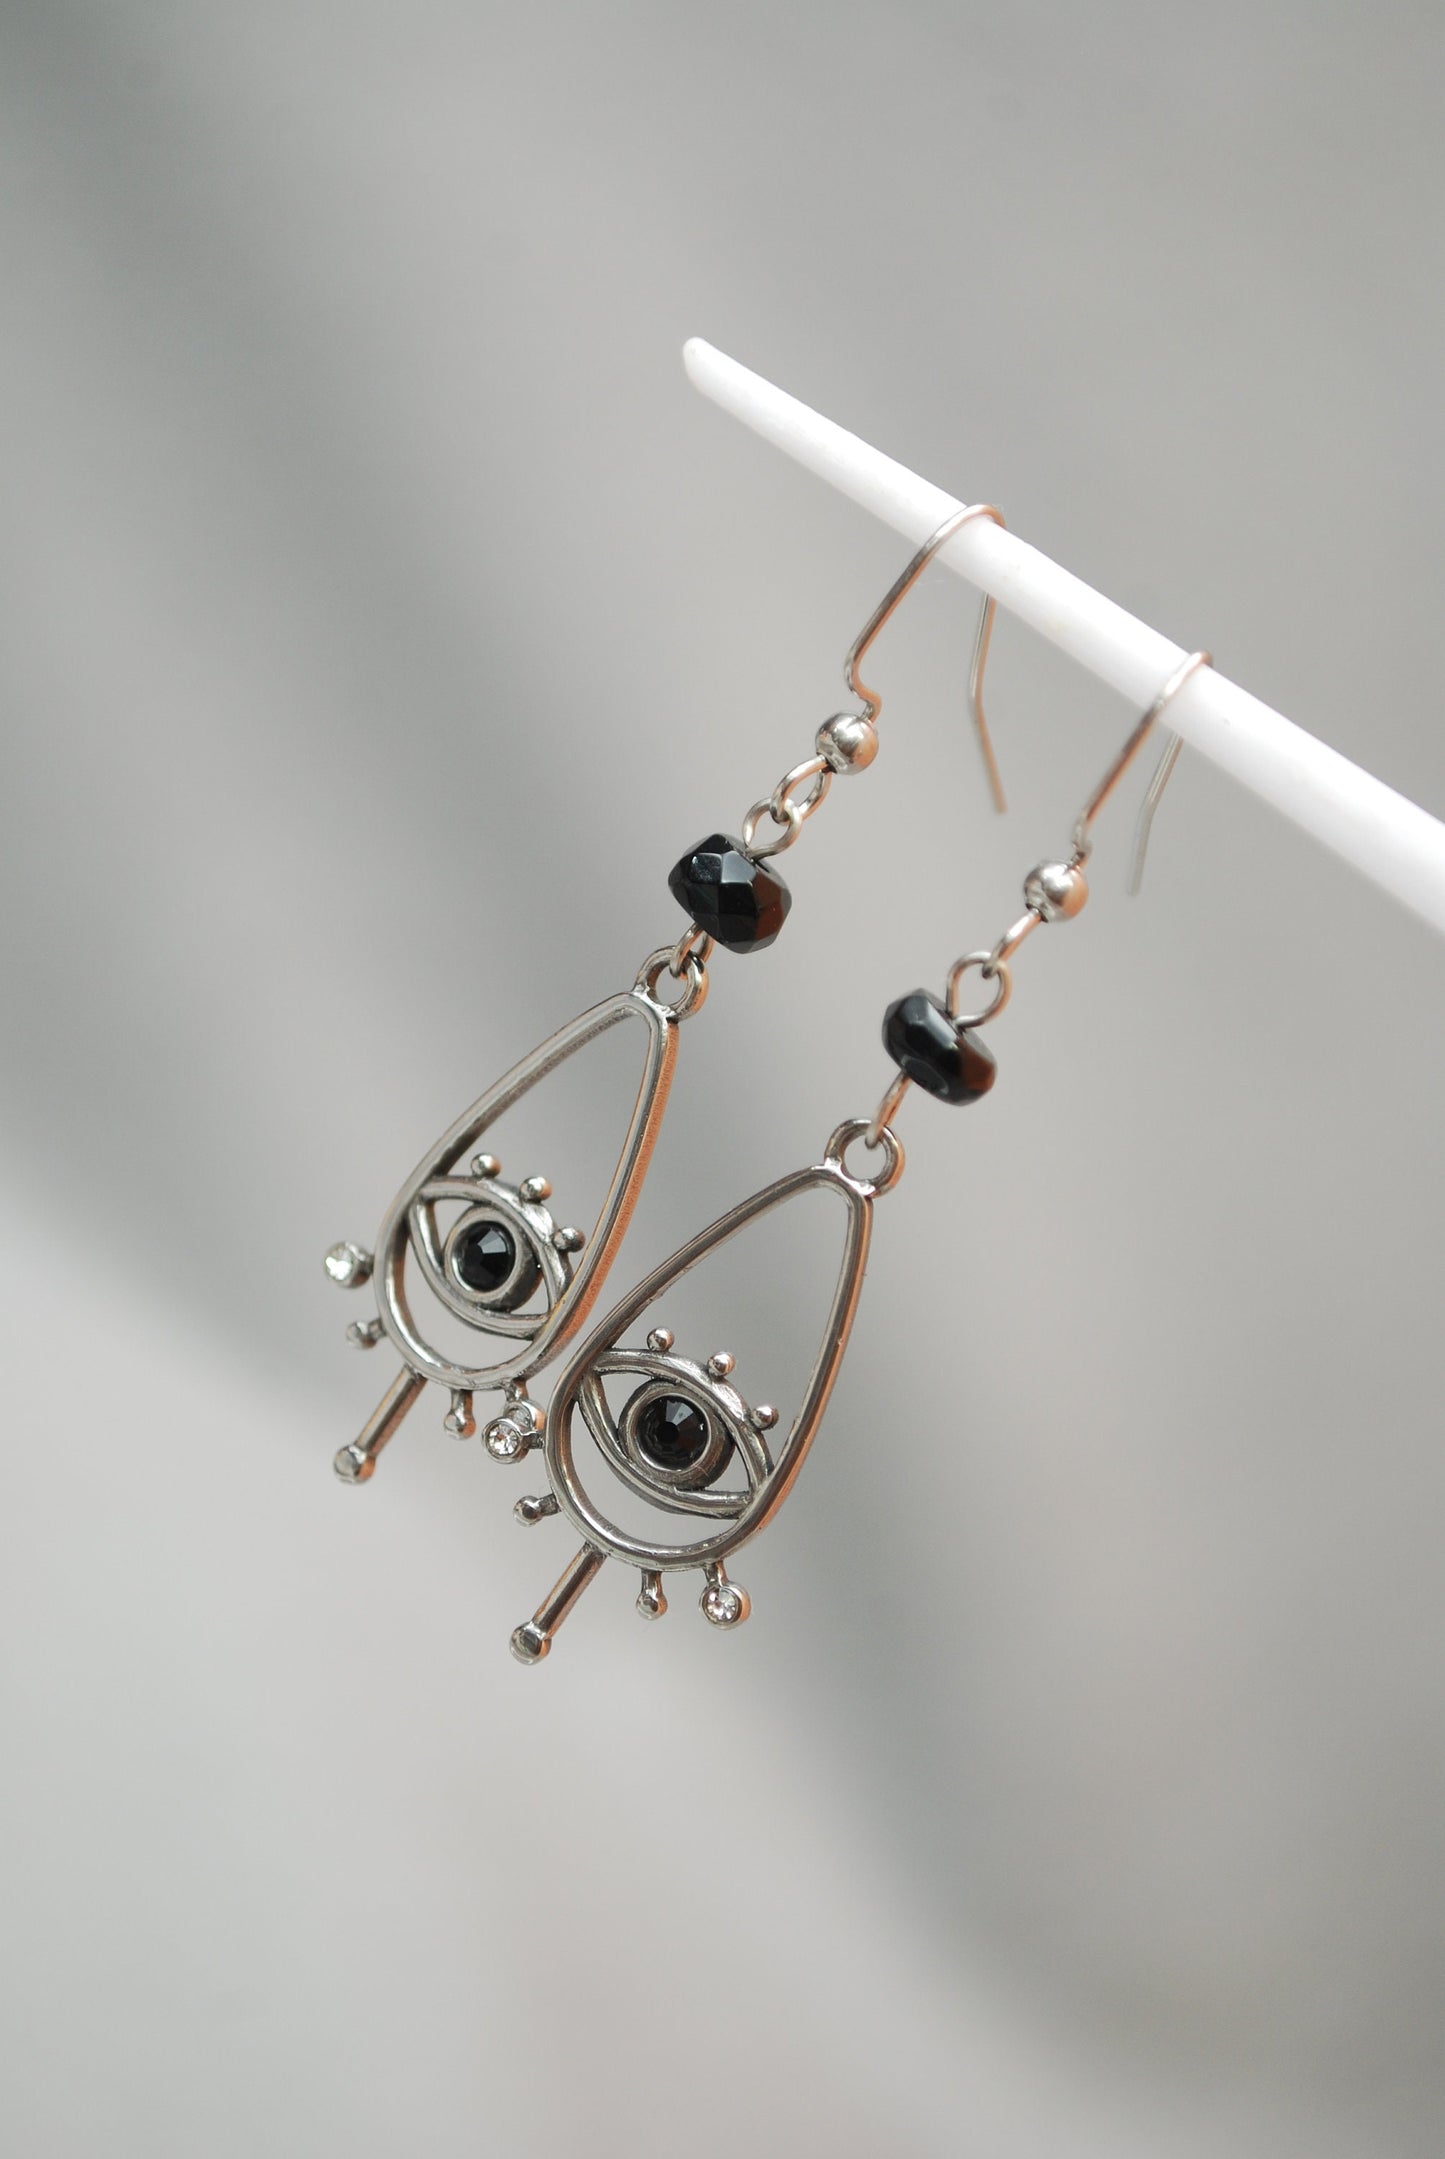 Ethnic Elegance Drops: Stainless Steel Earrings with Agate, Black agata bead Earrngs, Estibela design, 5.5cm 2.2", Ethnic-inspired earrings